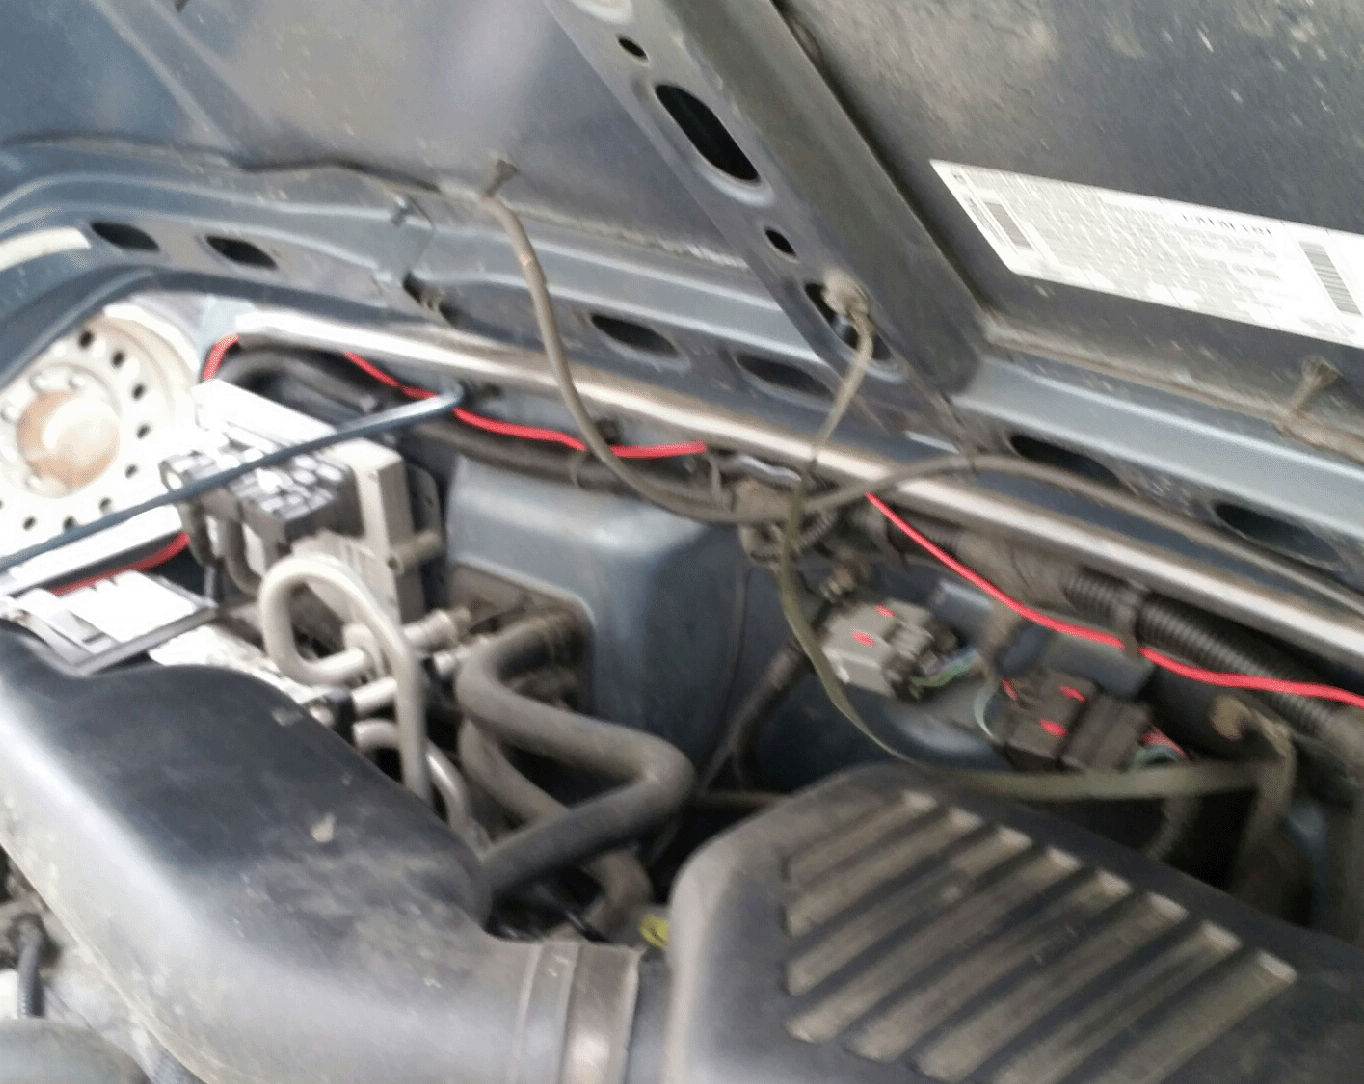 Wires under hood.gif